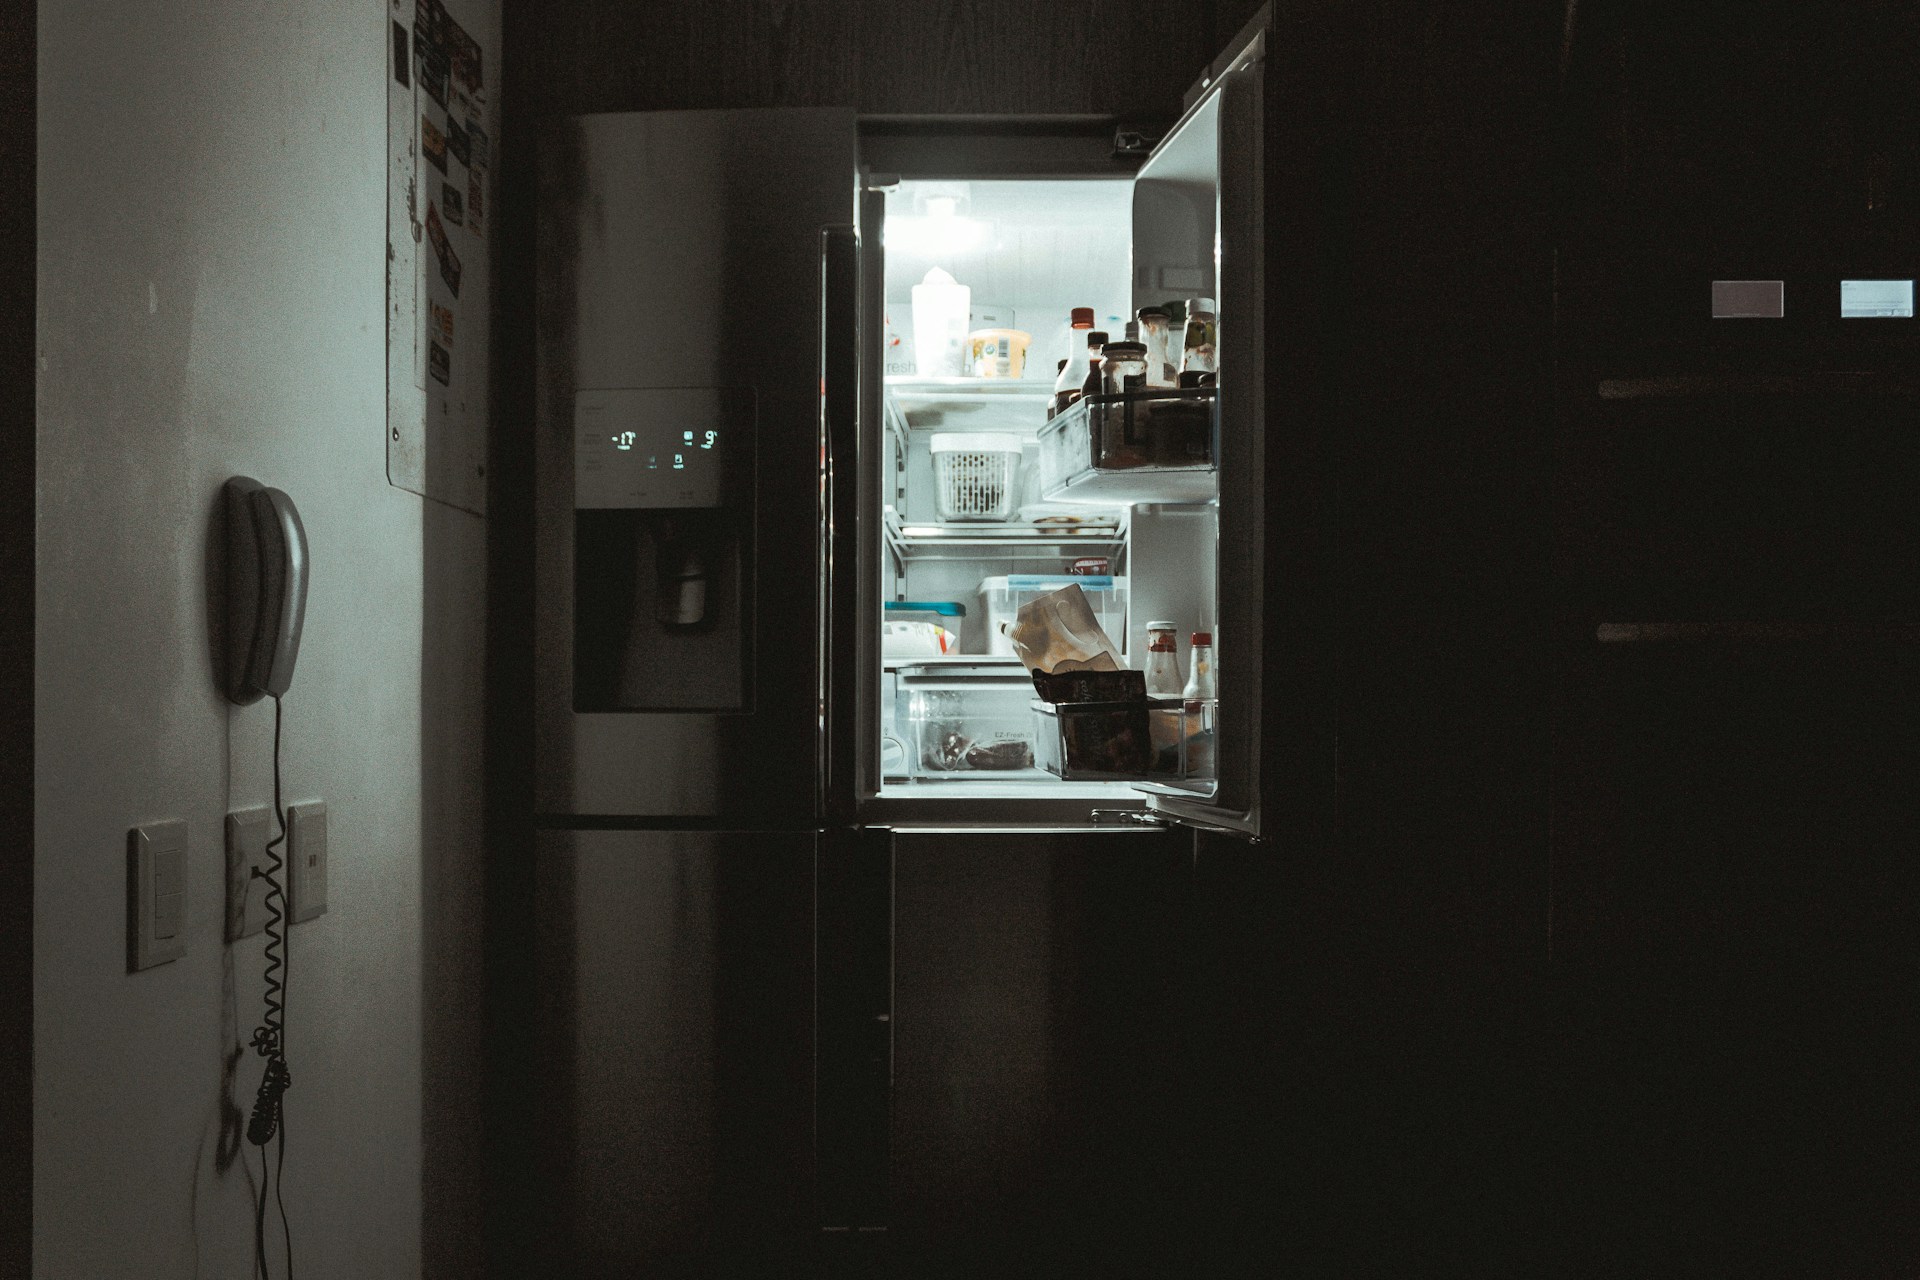 Comment bien ranger son frigo ?